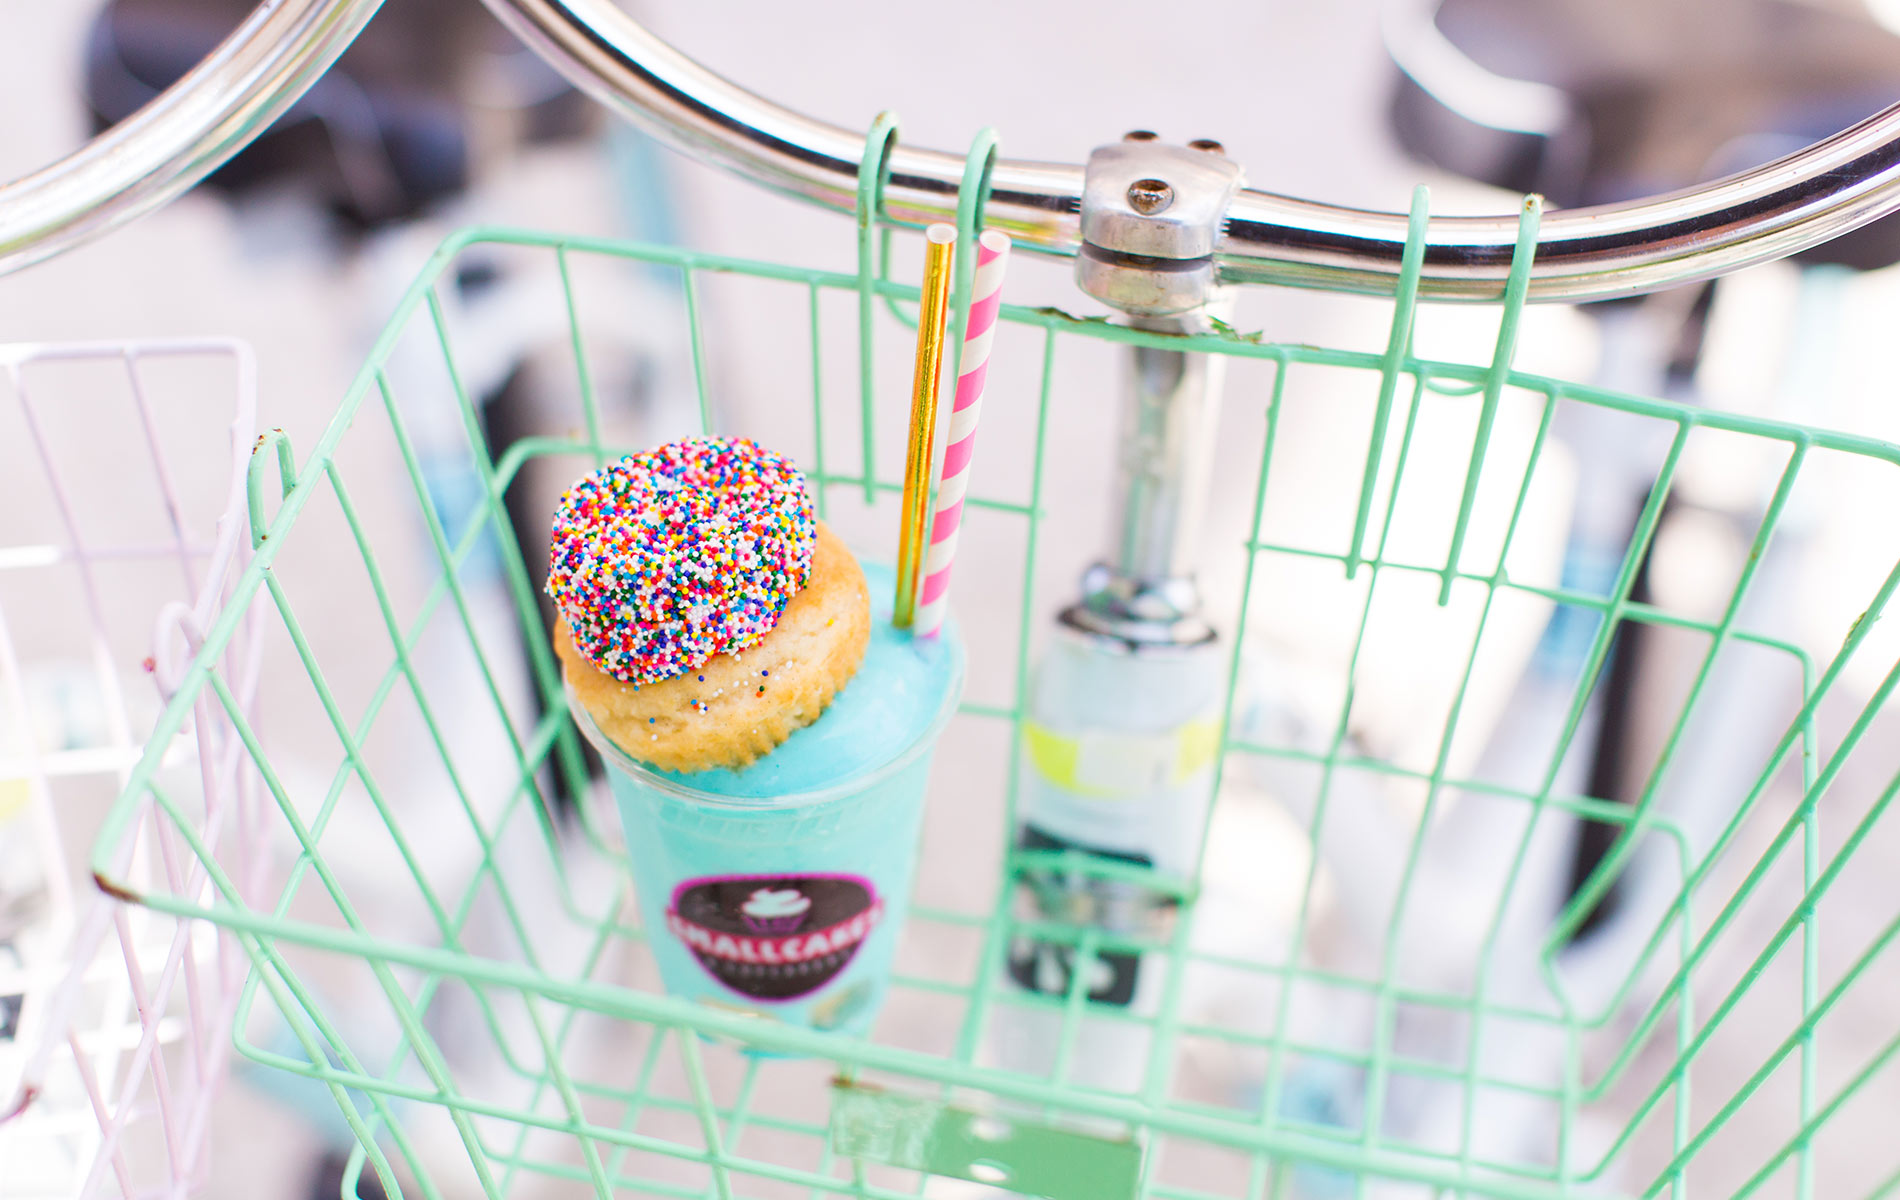 Smallcakes Cupcakery and Creamery, cupcake smoothie sitting in bike basket